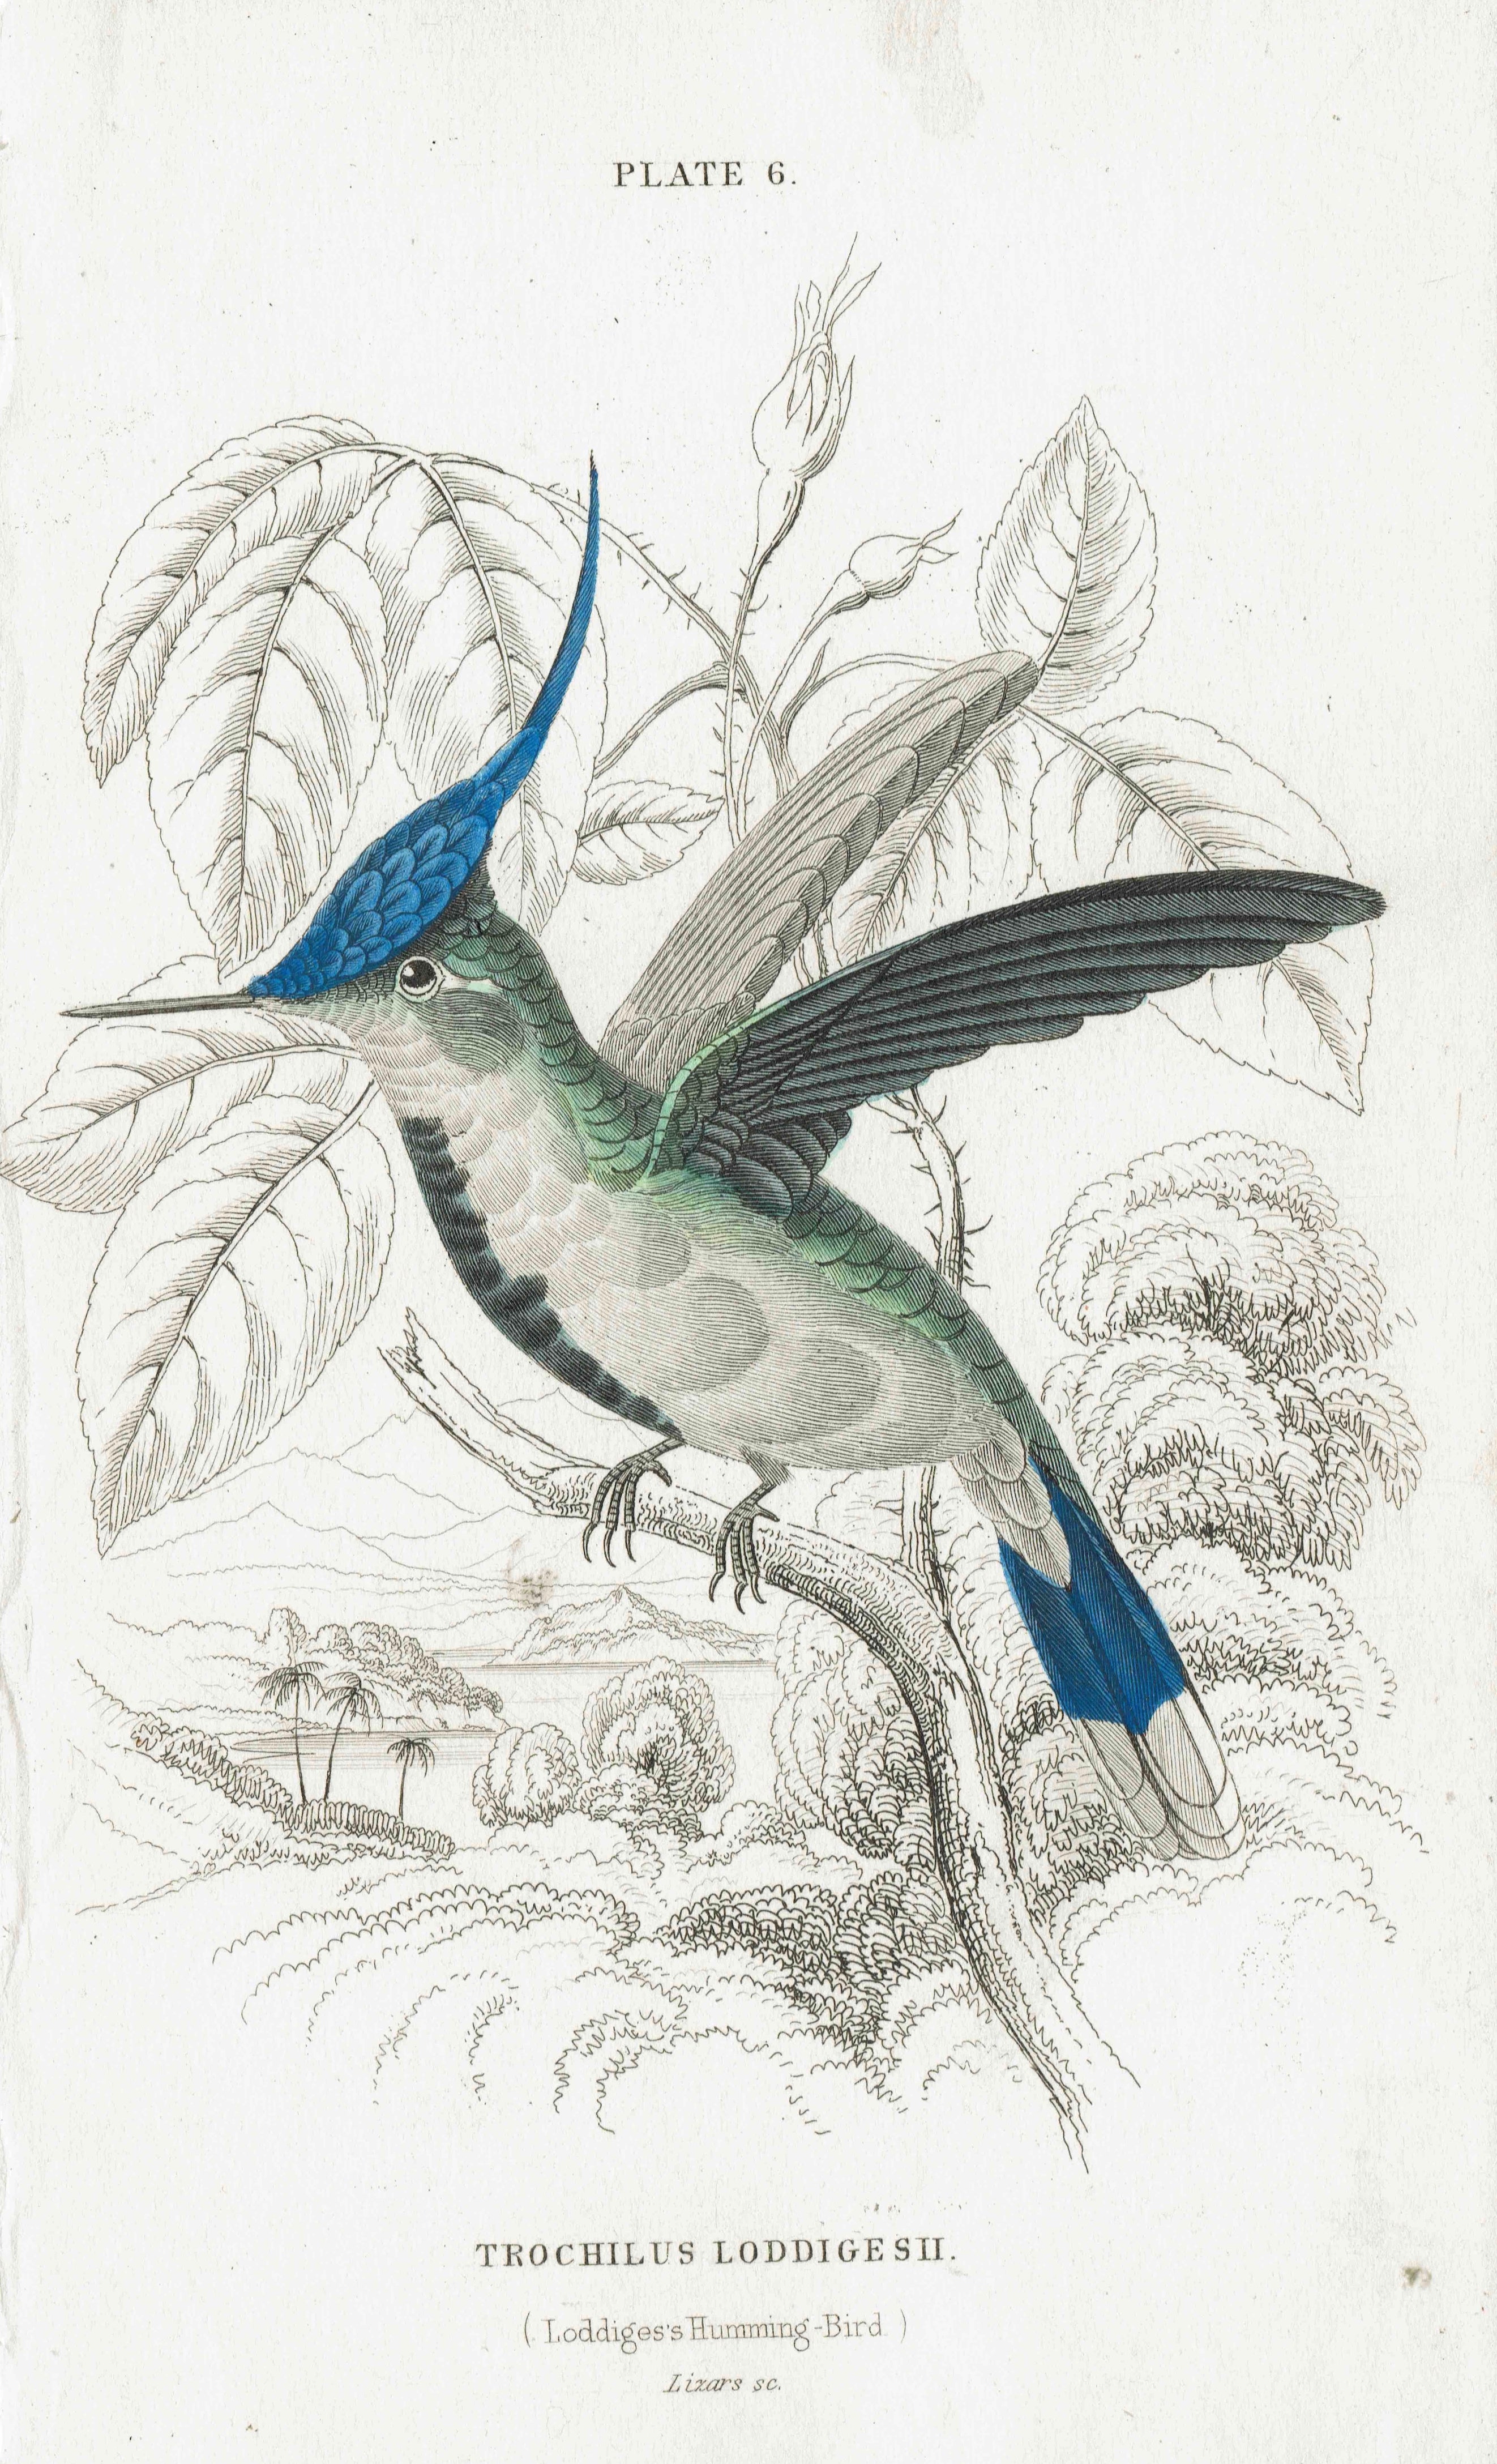 Loddiges's Humming-Bird (Trochilus Loddigesii)